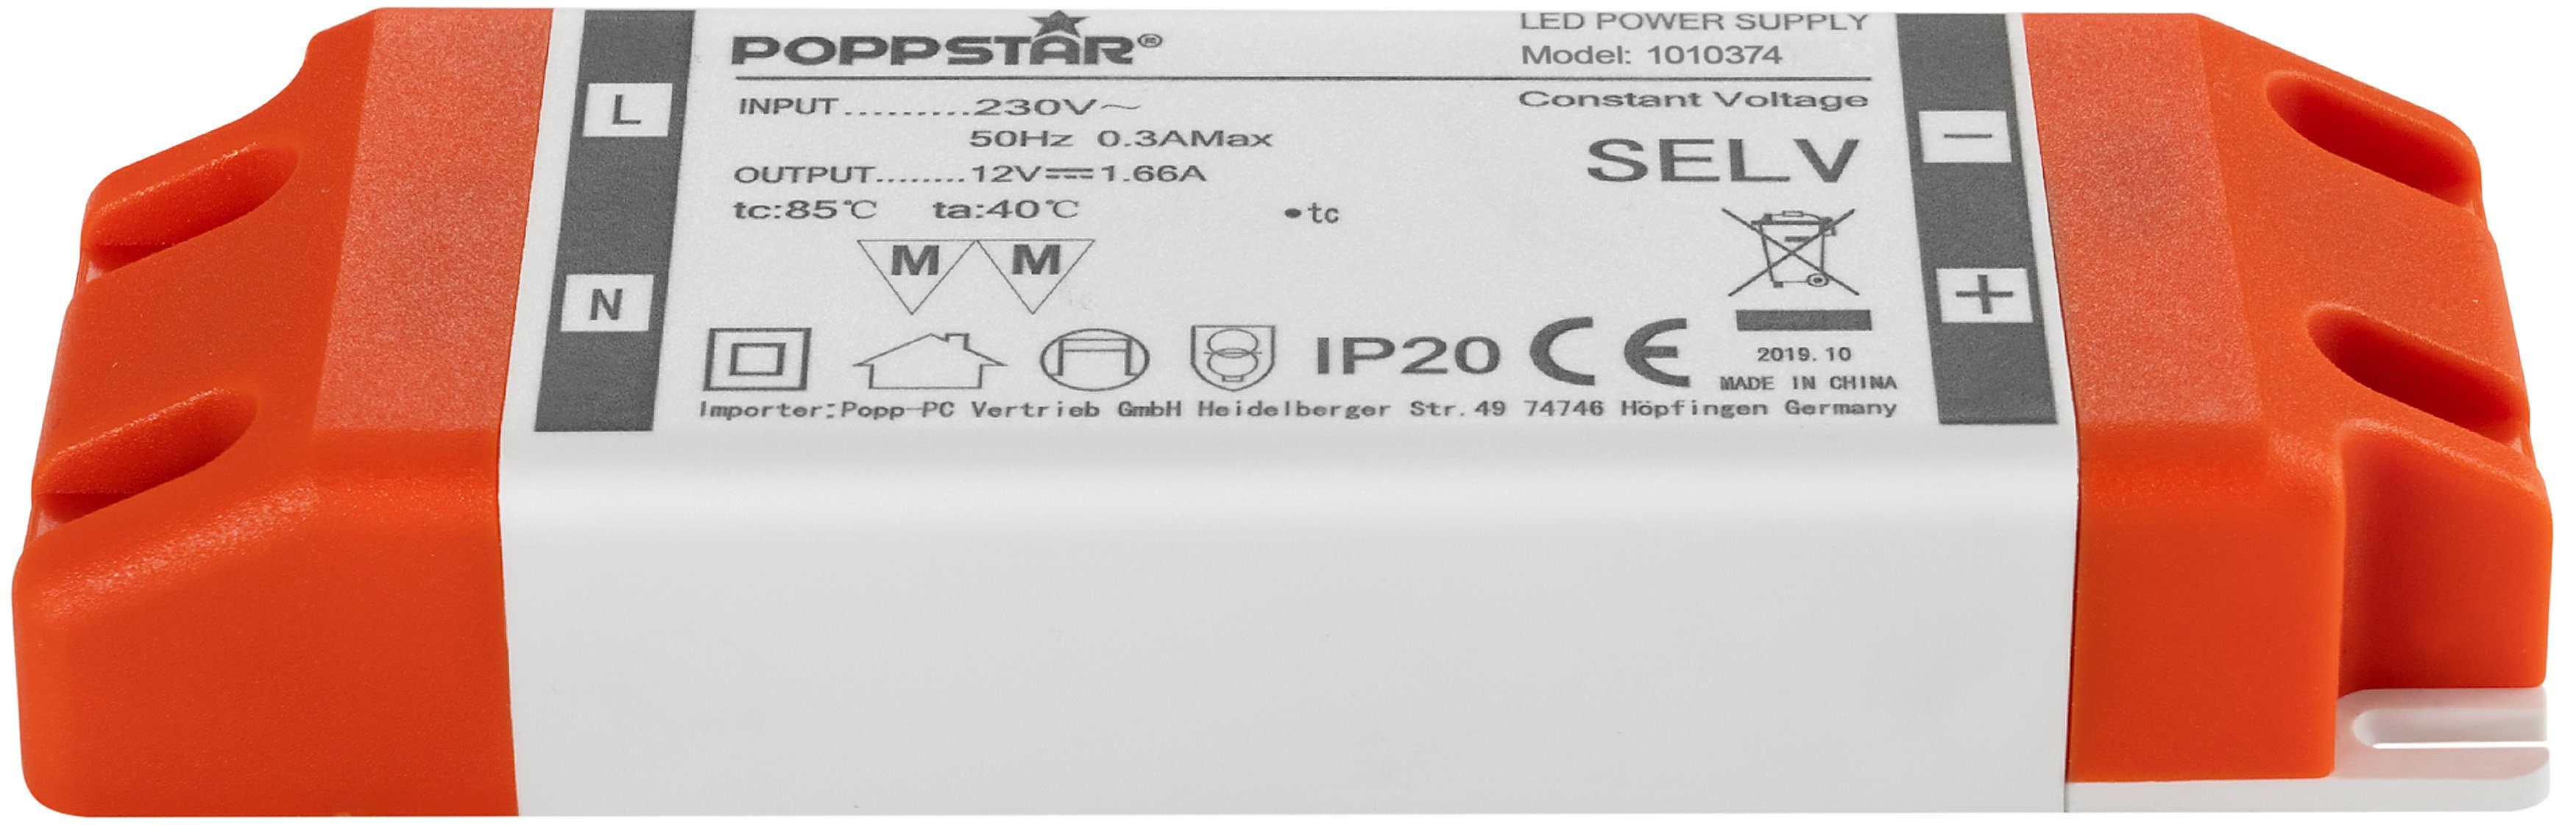 230V AC LED 0,2 1,66A 20 bis LED Lampen Bänder) Poppstar Transformator (für Watt LED 12V Trafo und LED LED DC Strips, /